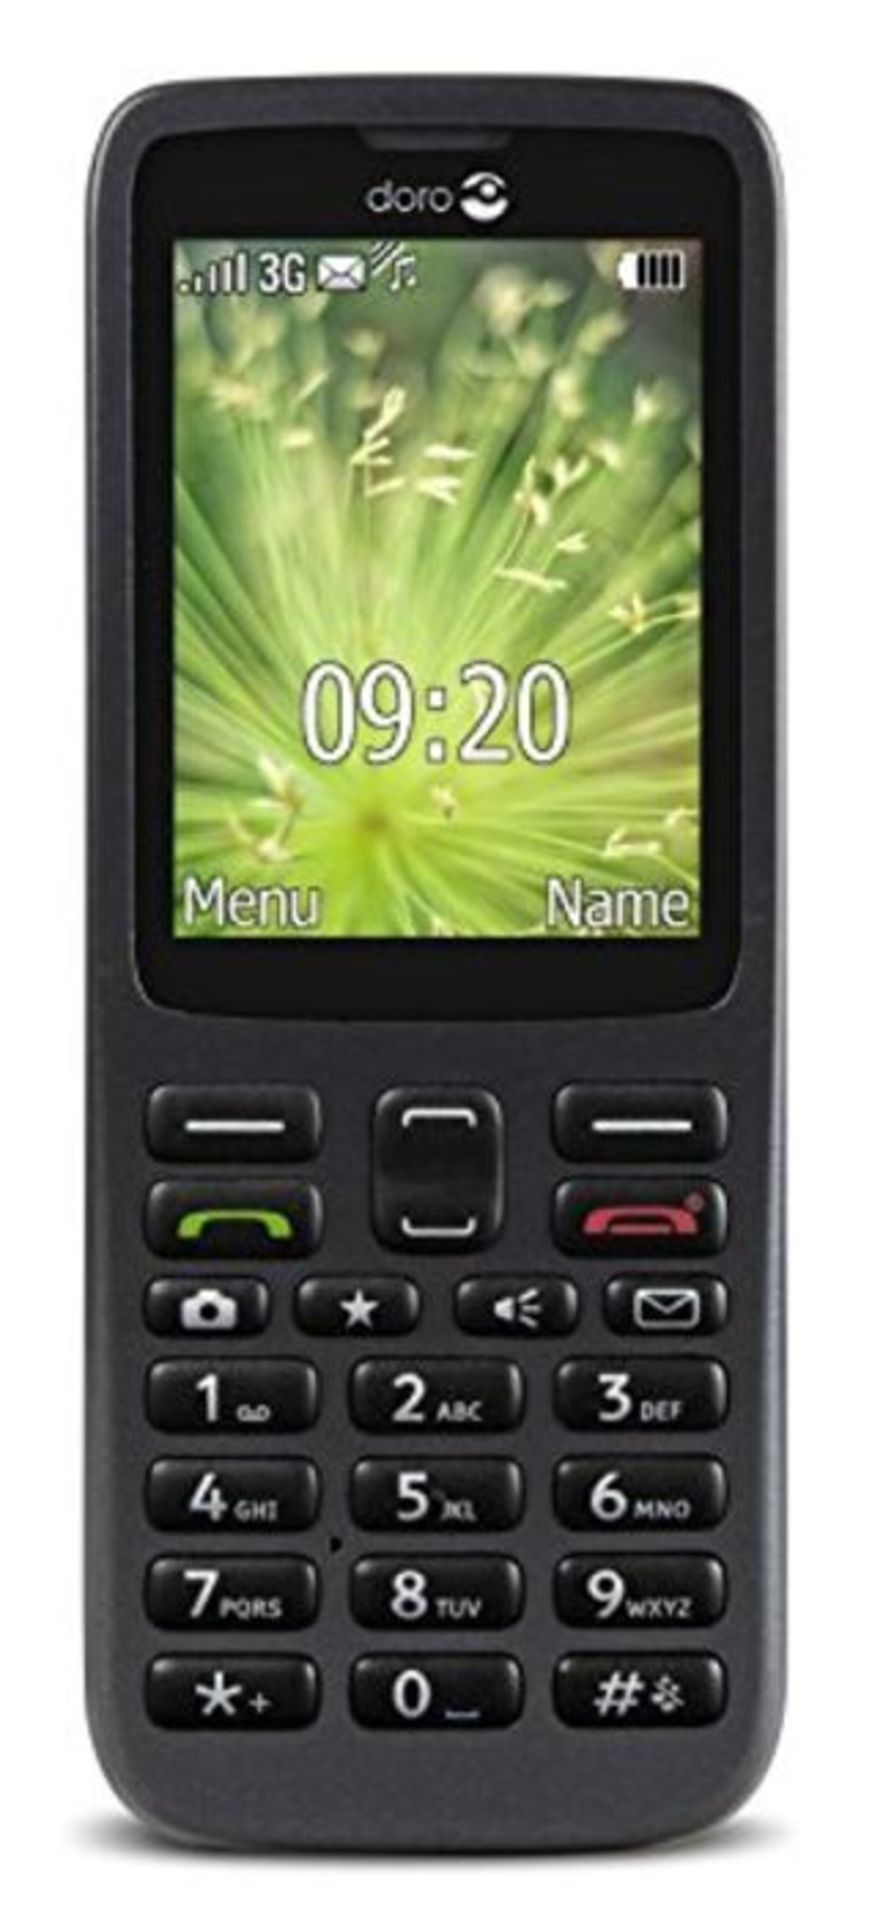 Doro 5516 Unlocked Easy-to-Use Classic Mobile Phone for Seniors for 3G Networks (Black